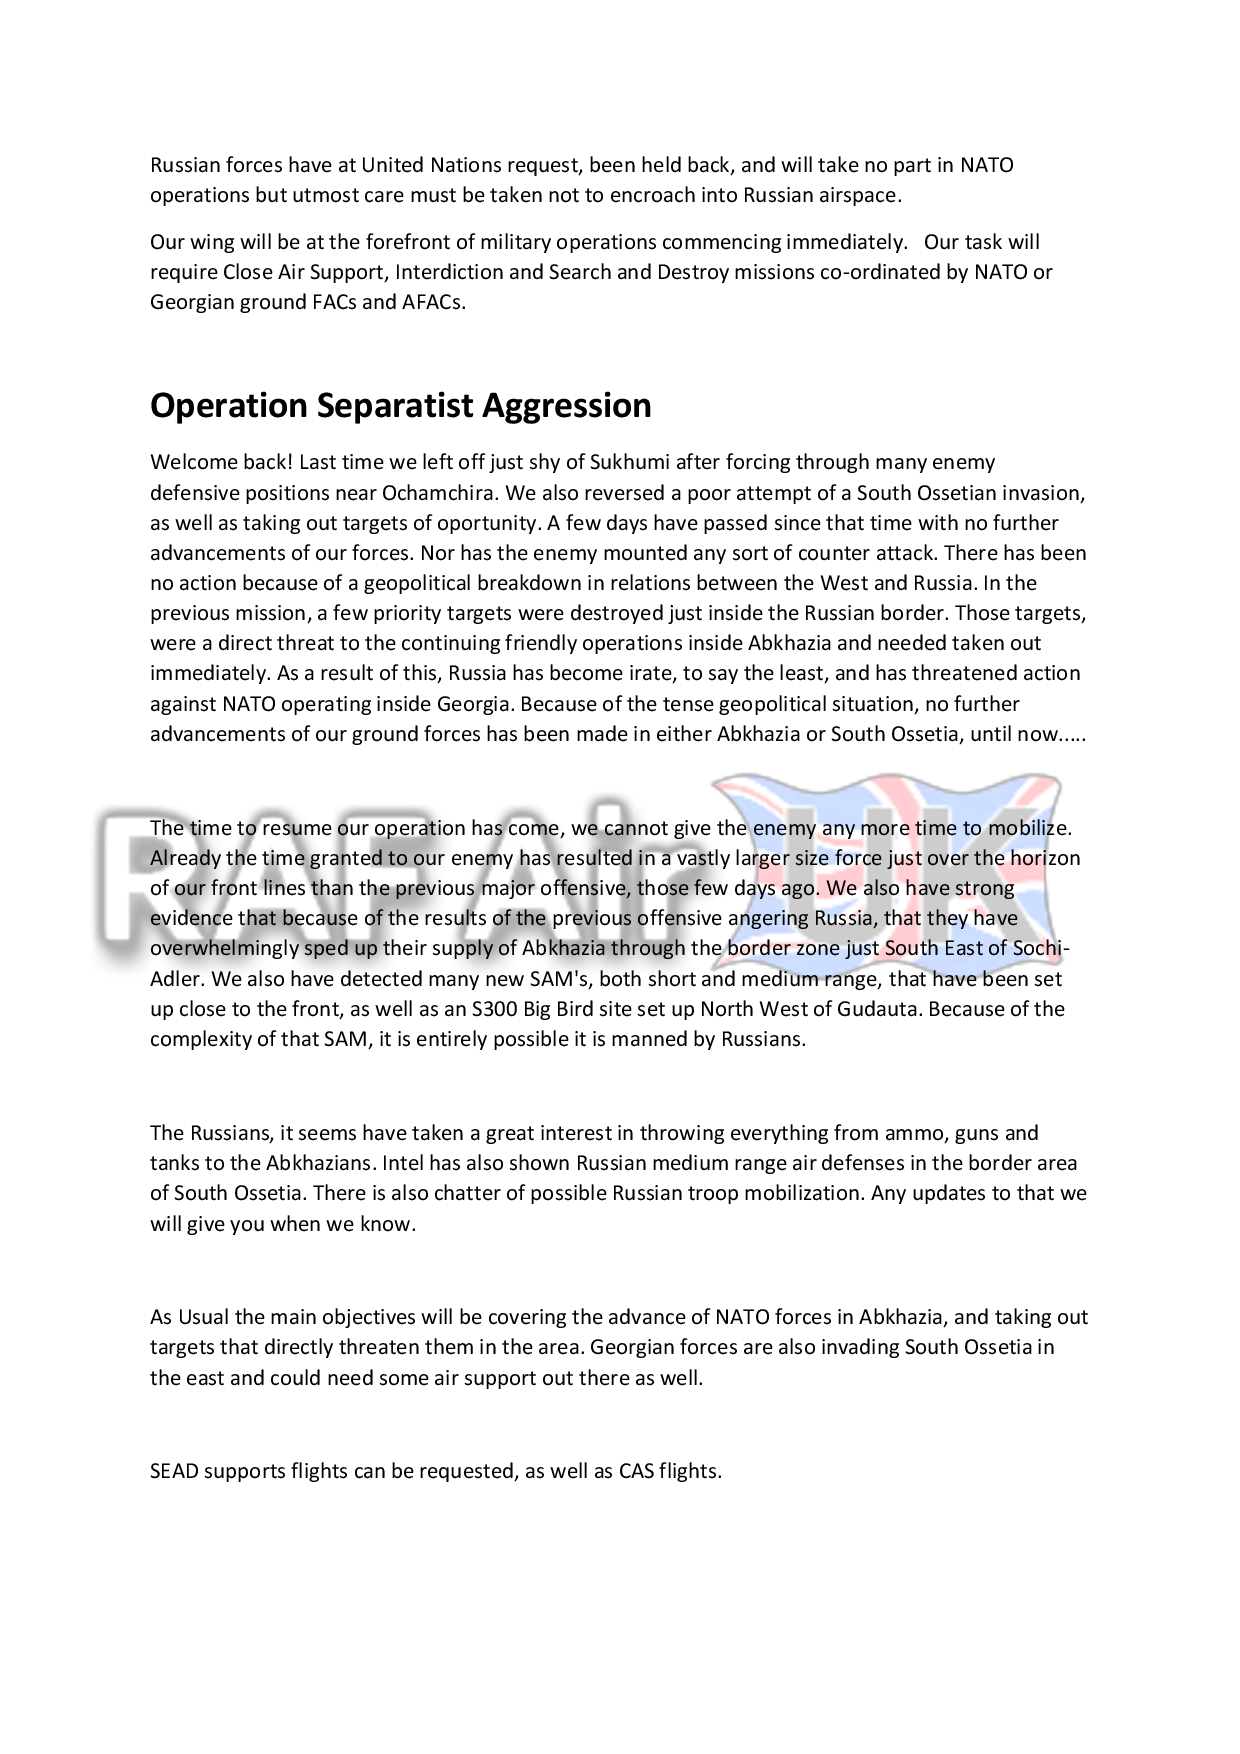 002-Op Separatist Aggression-001.png